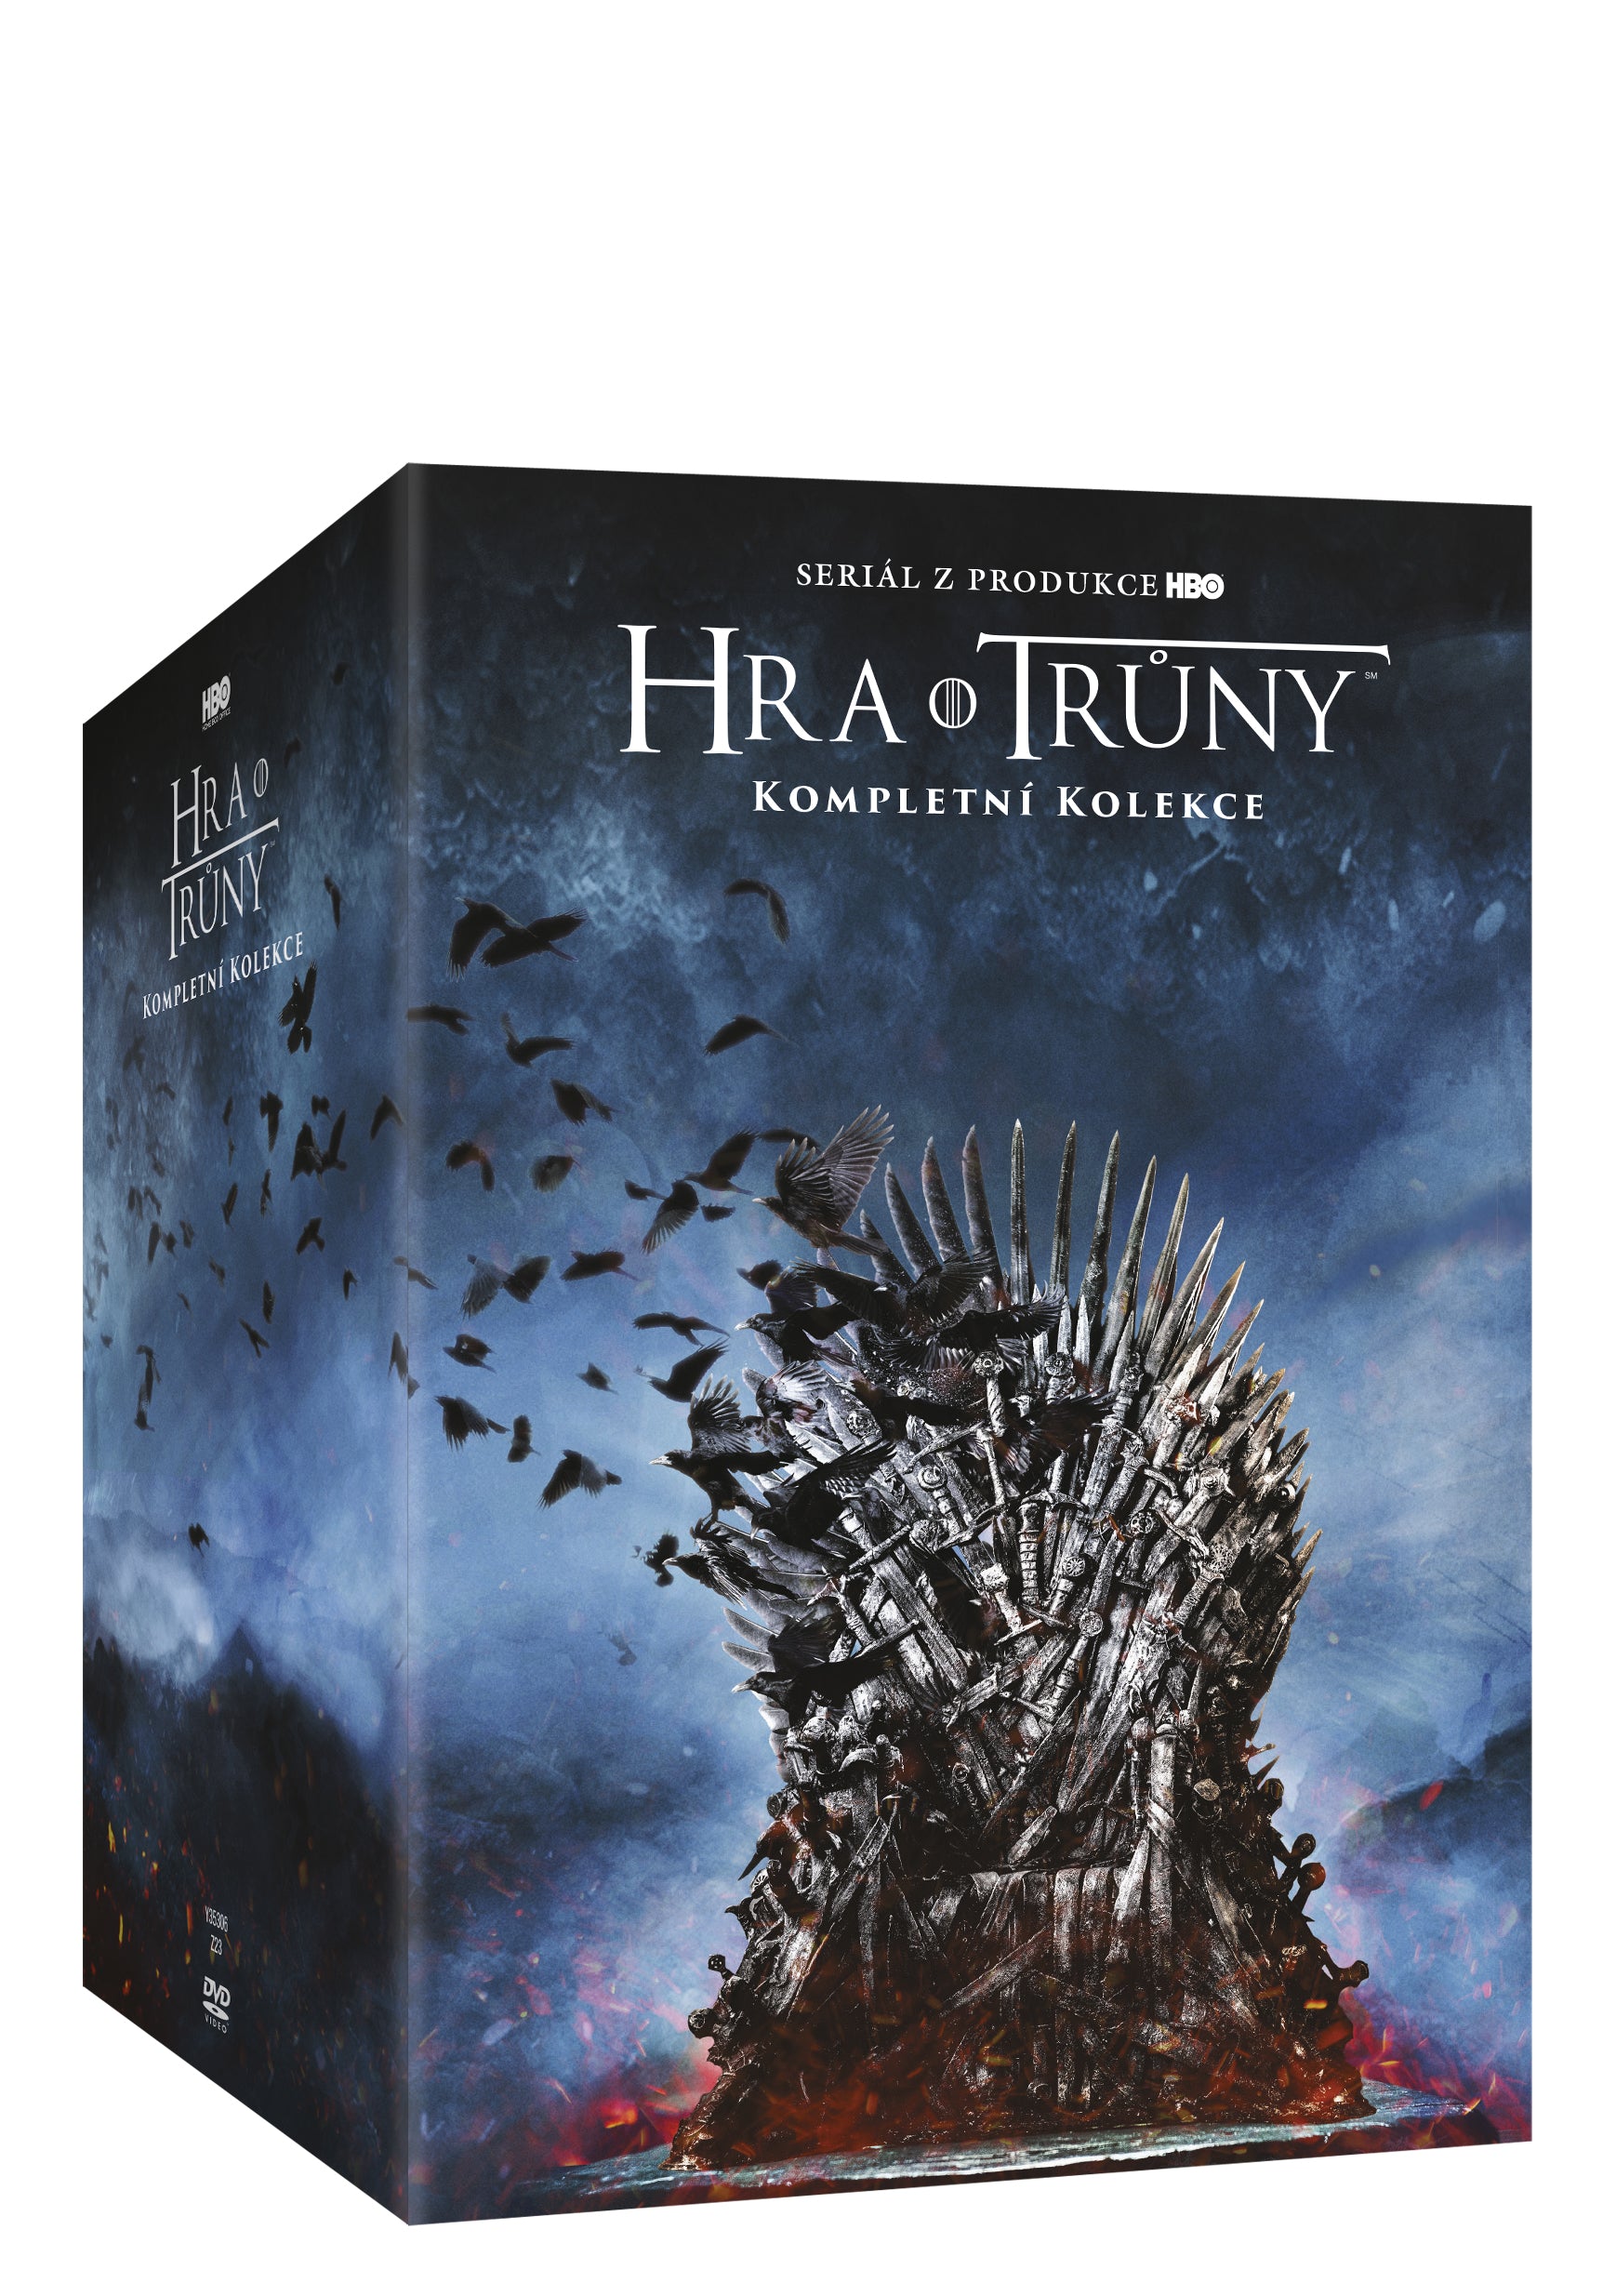 Hra o truny kolekce 1.-8. serie 38DVD / Game of Thrones Season 1-8 DVD Complete Box Set